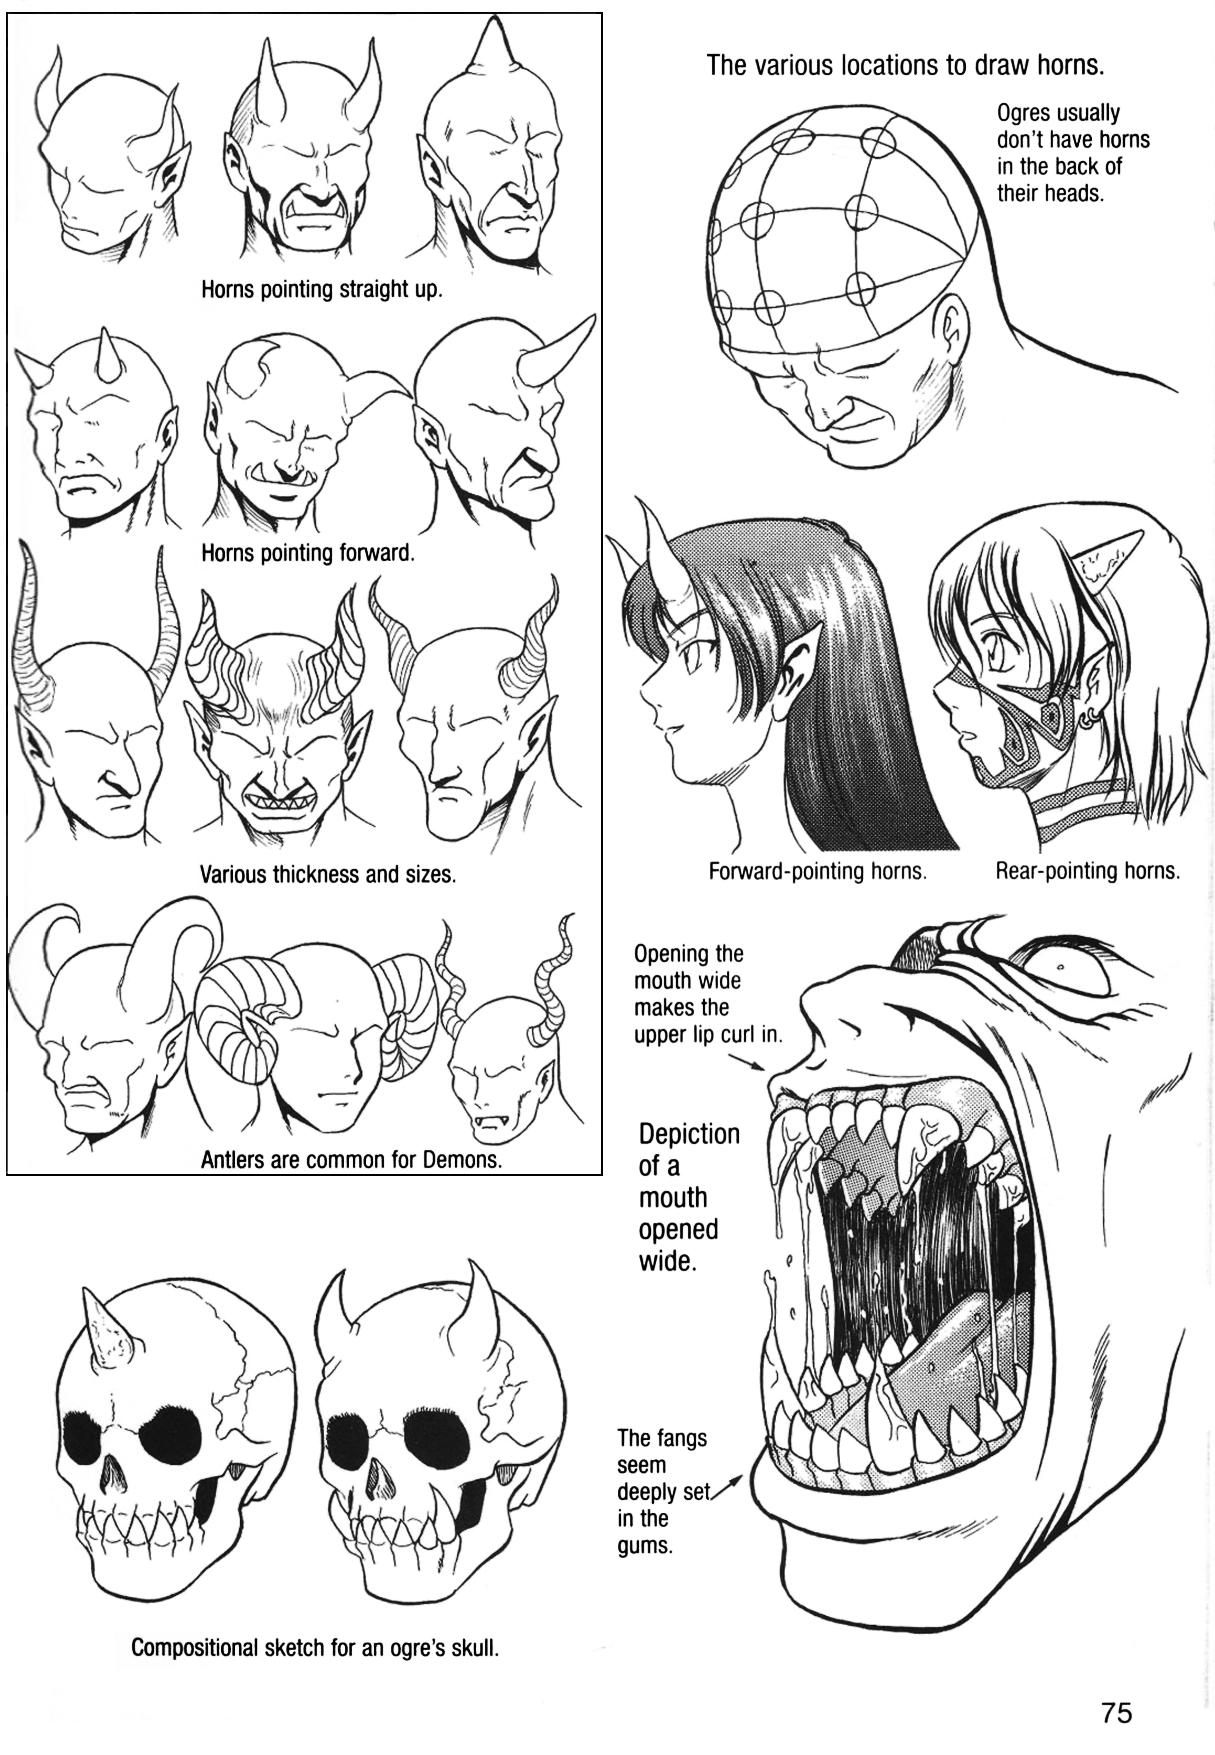 How to Draw Manga Vol. 24, Occult & Horror by Hikaru Hayashi 78